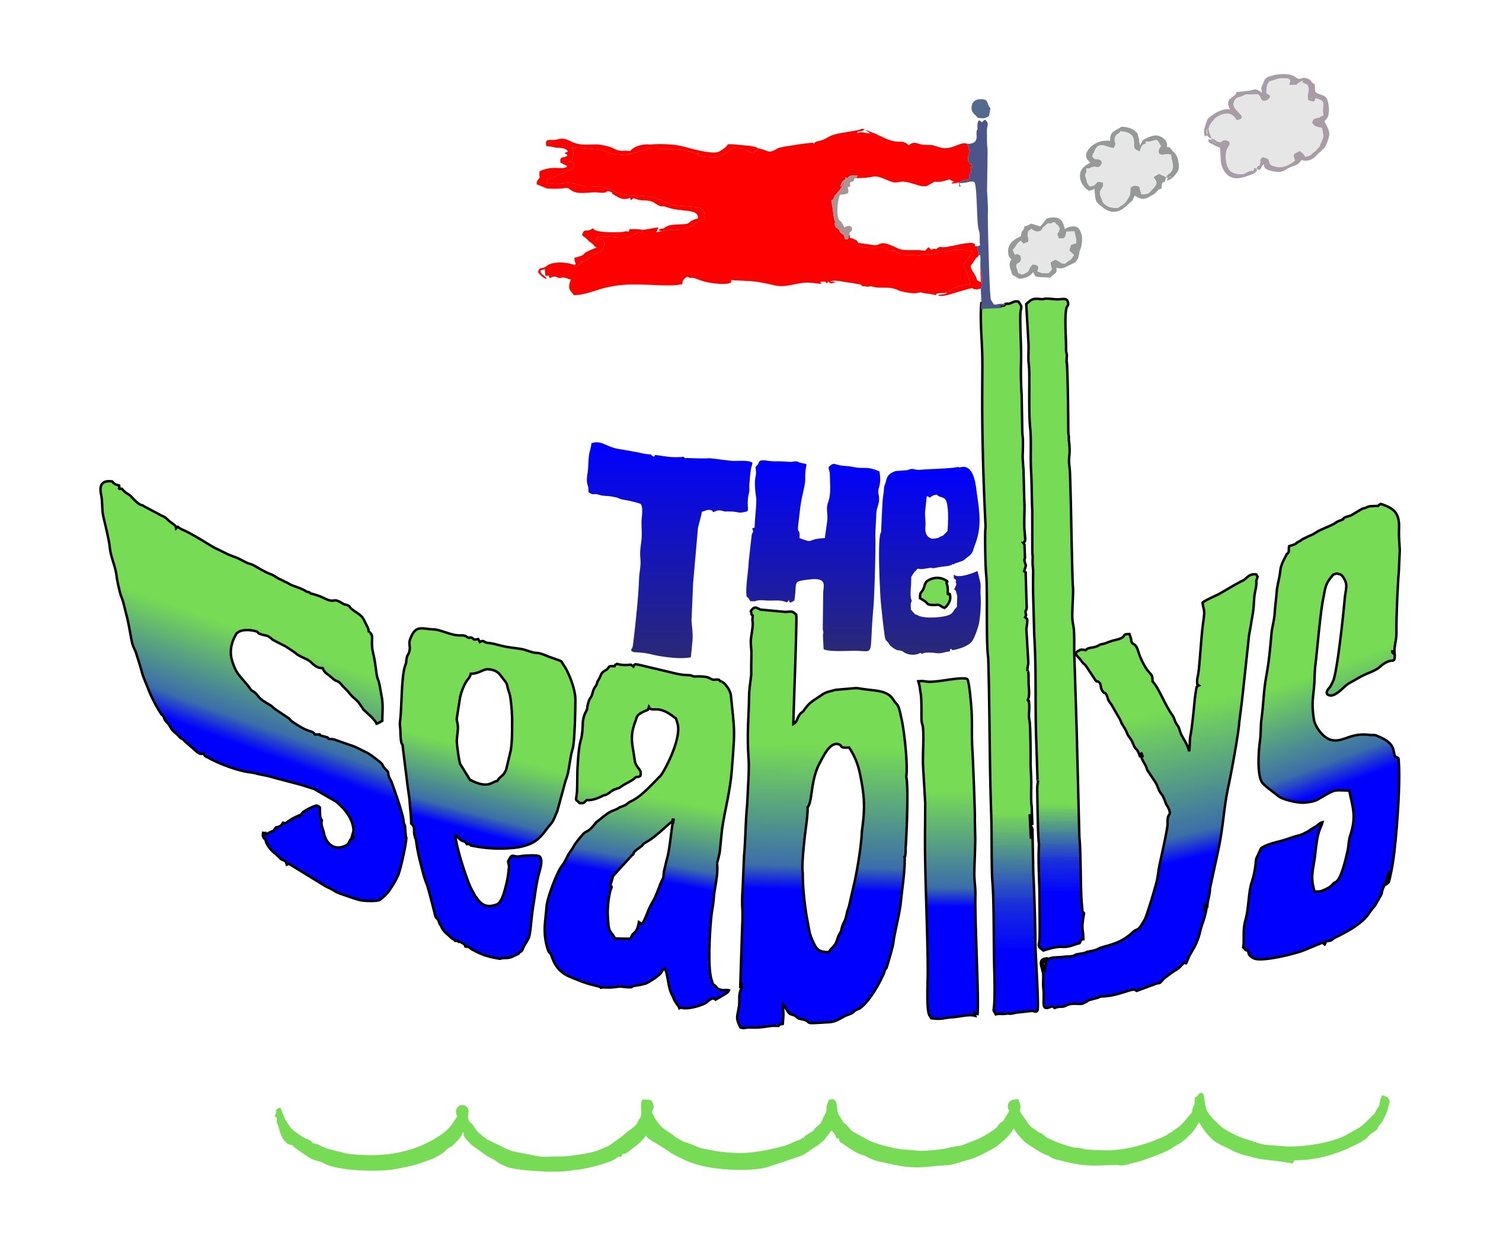 The Seabillys